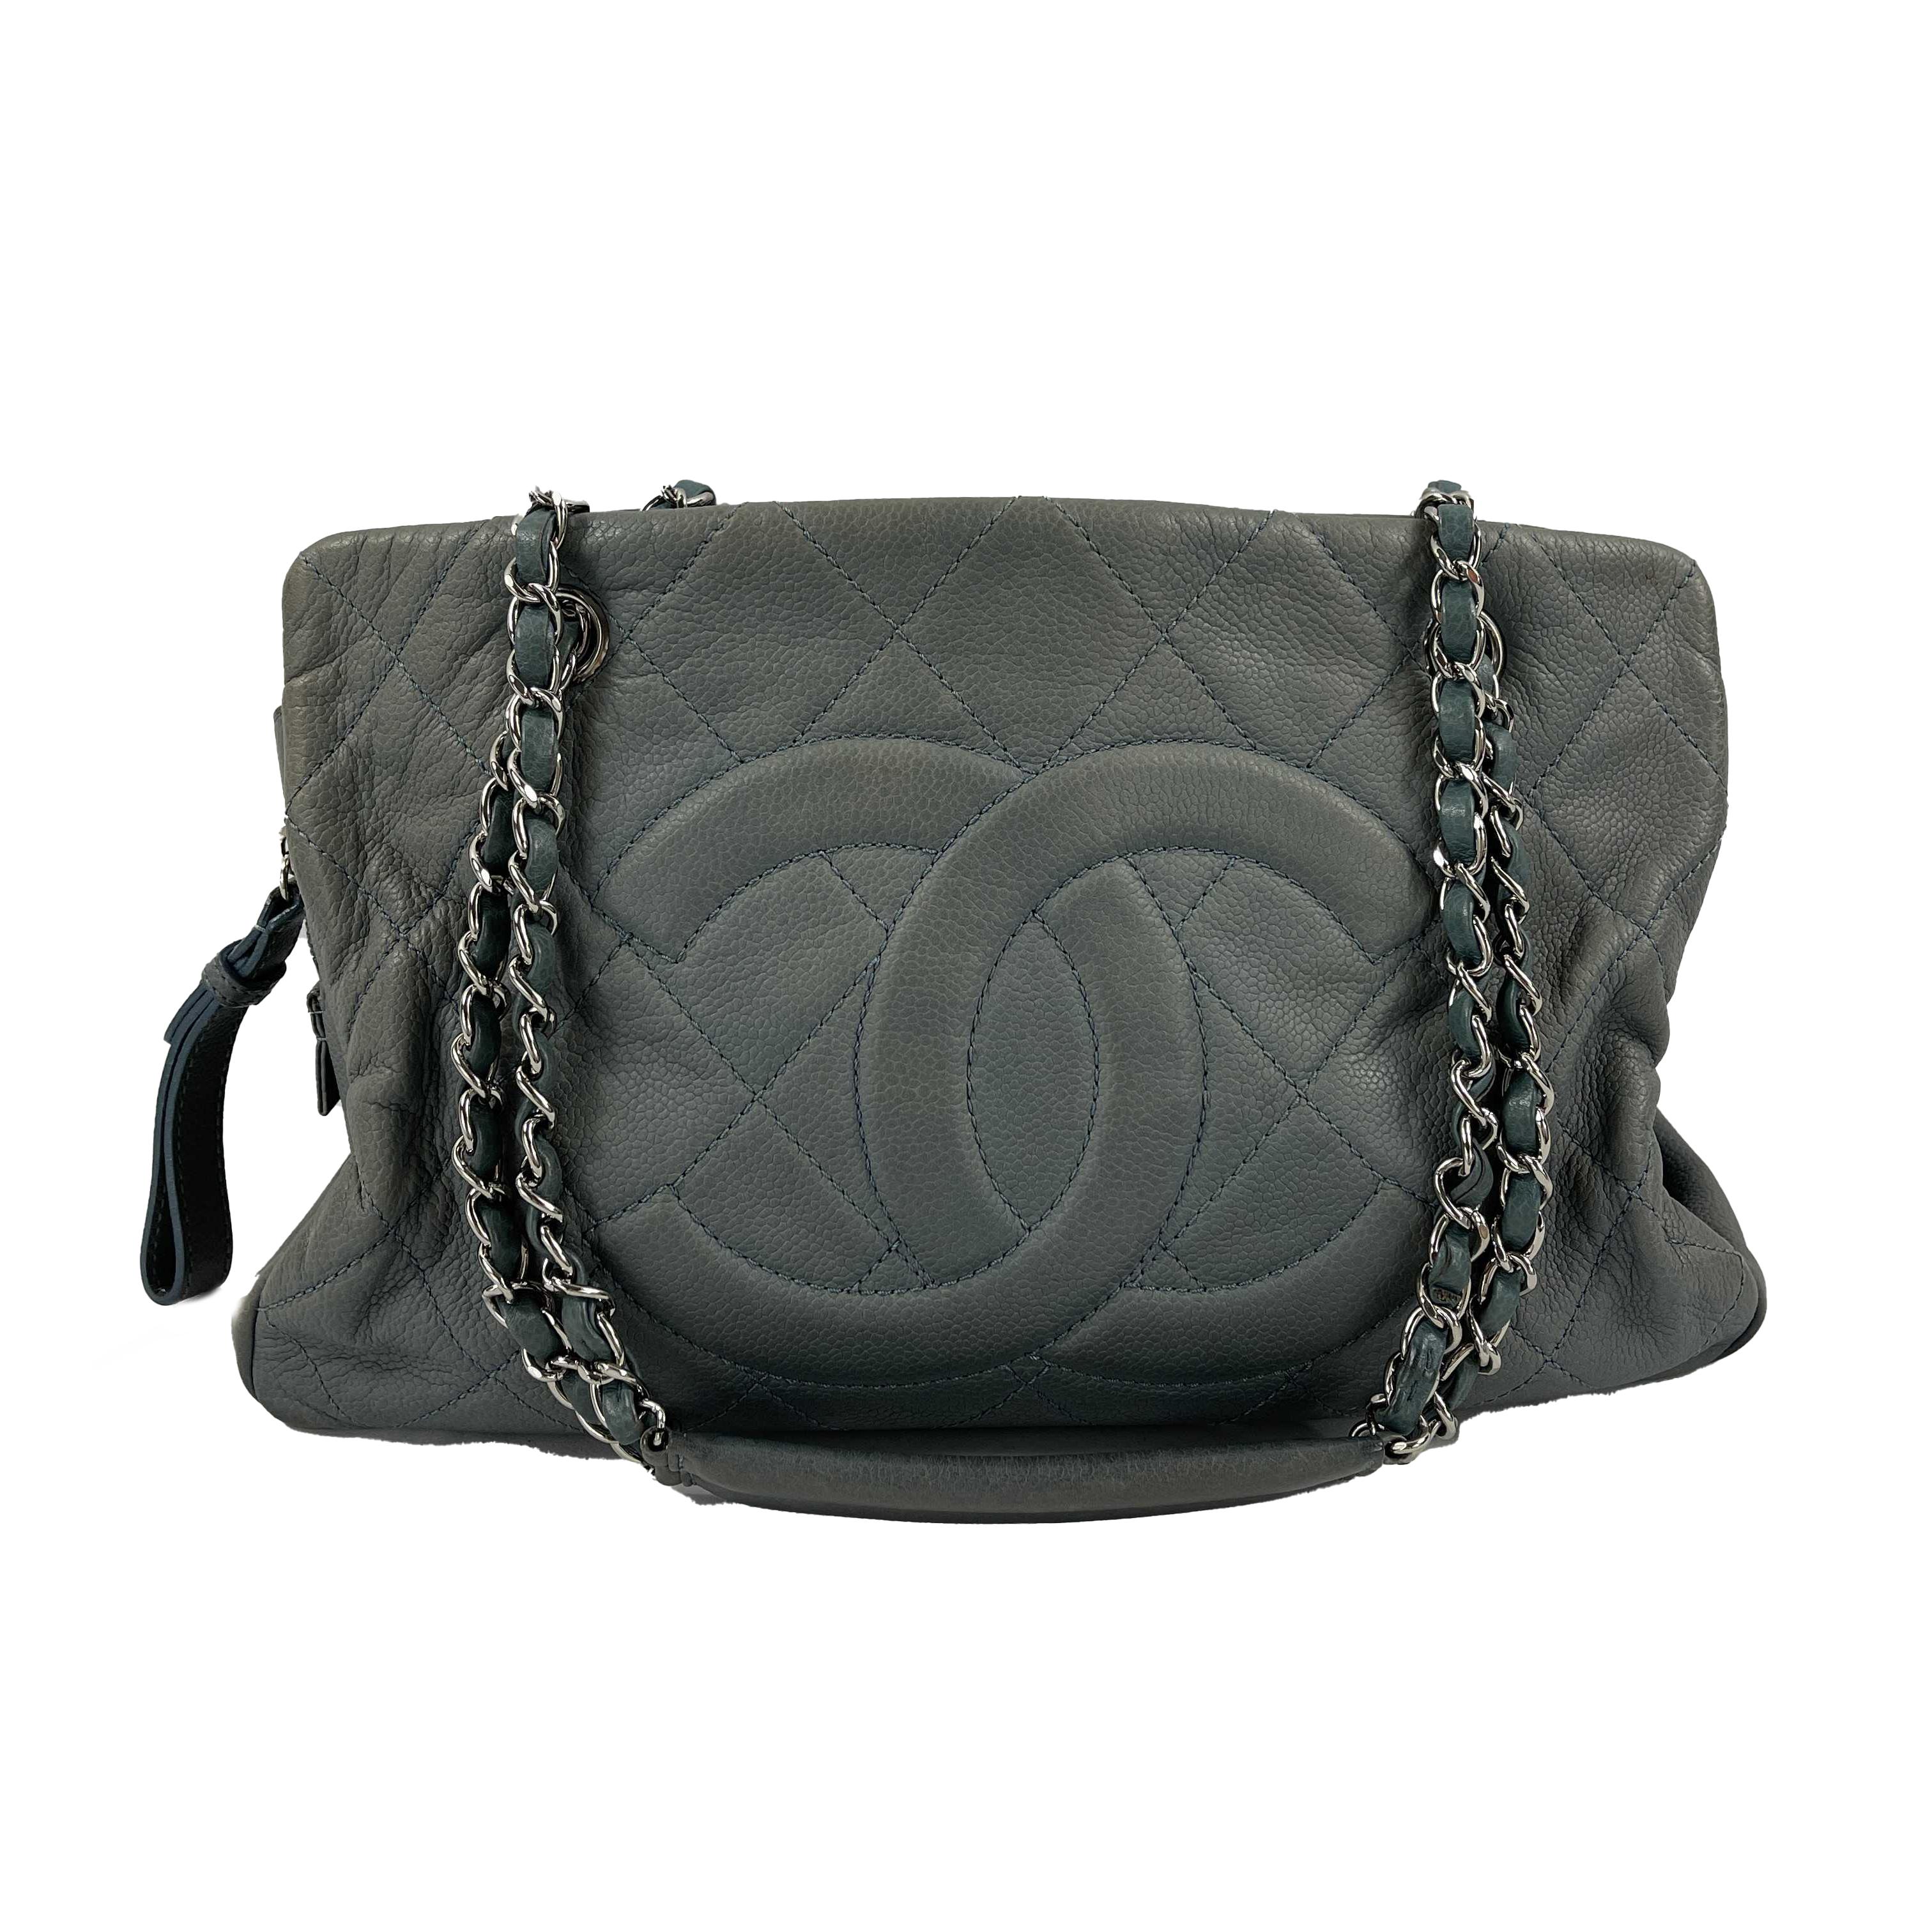 CHANEL  Seafoam / Silver CC Caviar Medium Leather Shopping Tote / Shoulder Bag For Sale 2